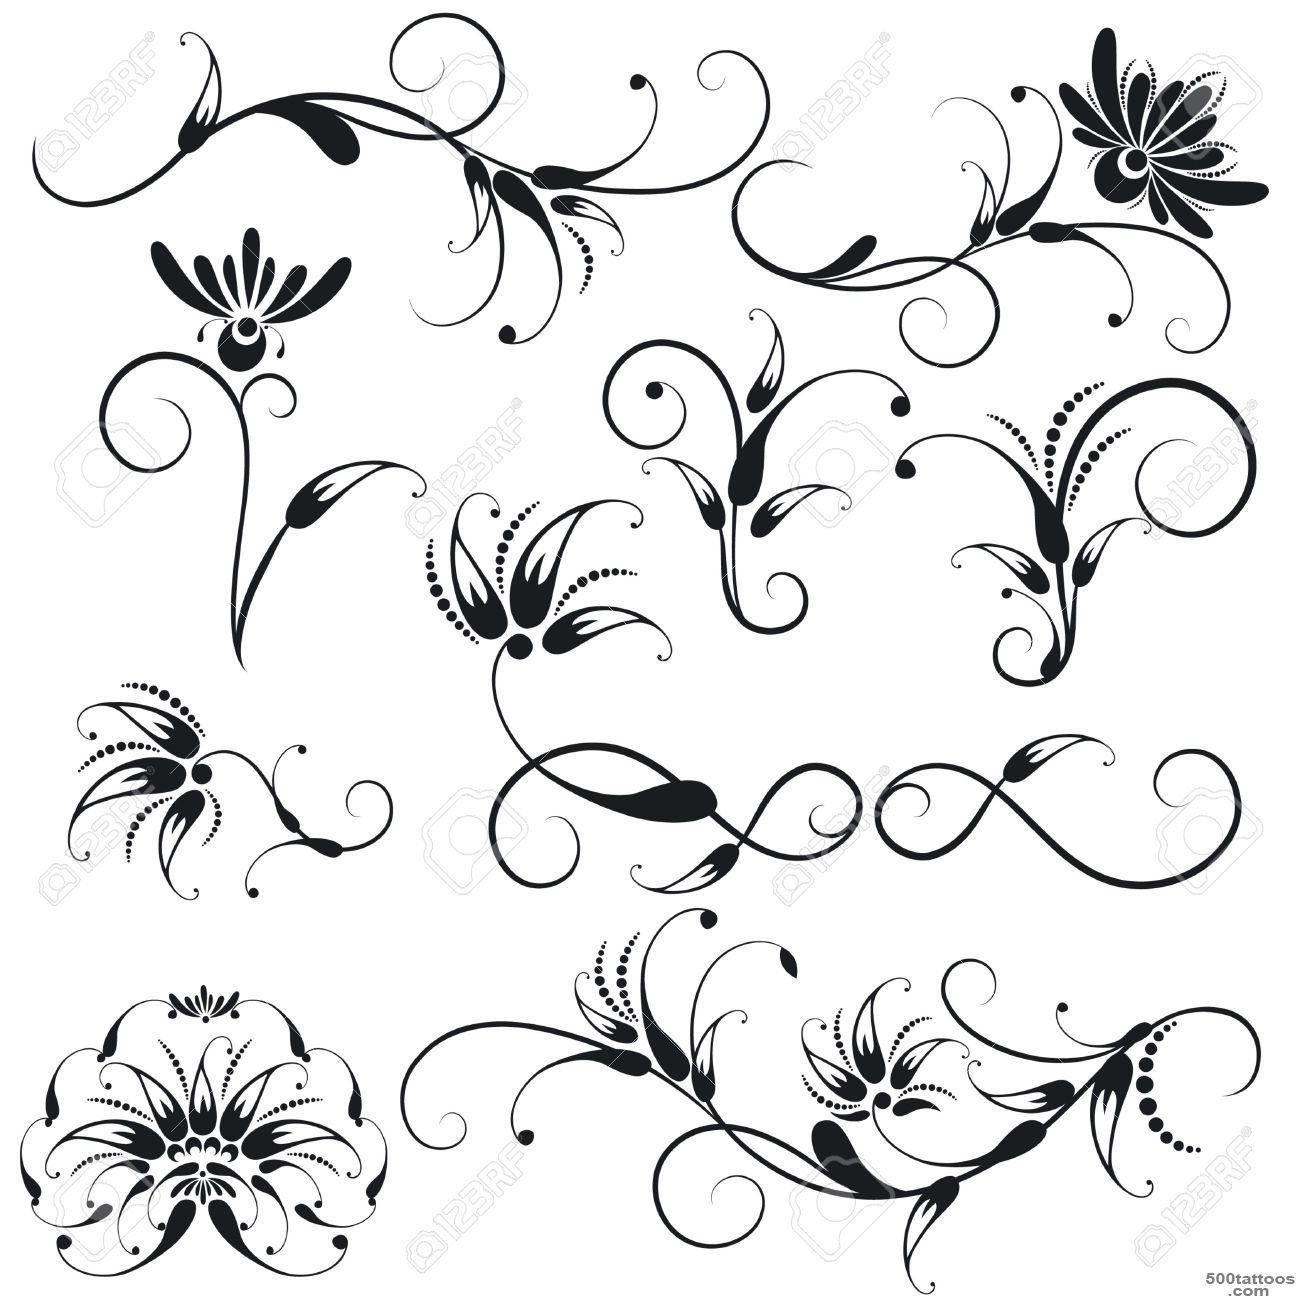 Decorative Floral Design Elements Royalty Free Cliparts, Vectors ..._33